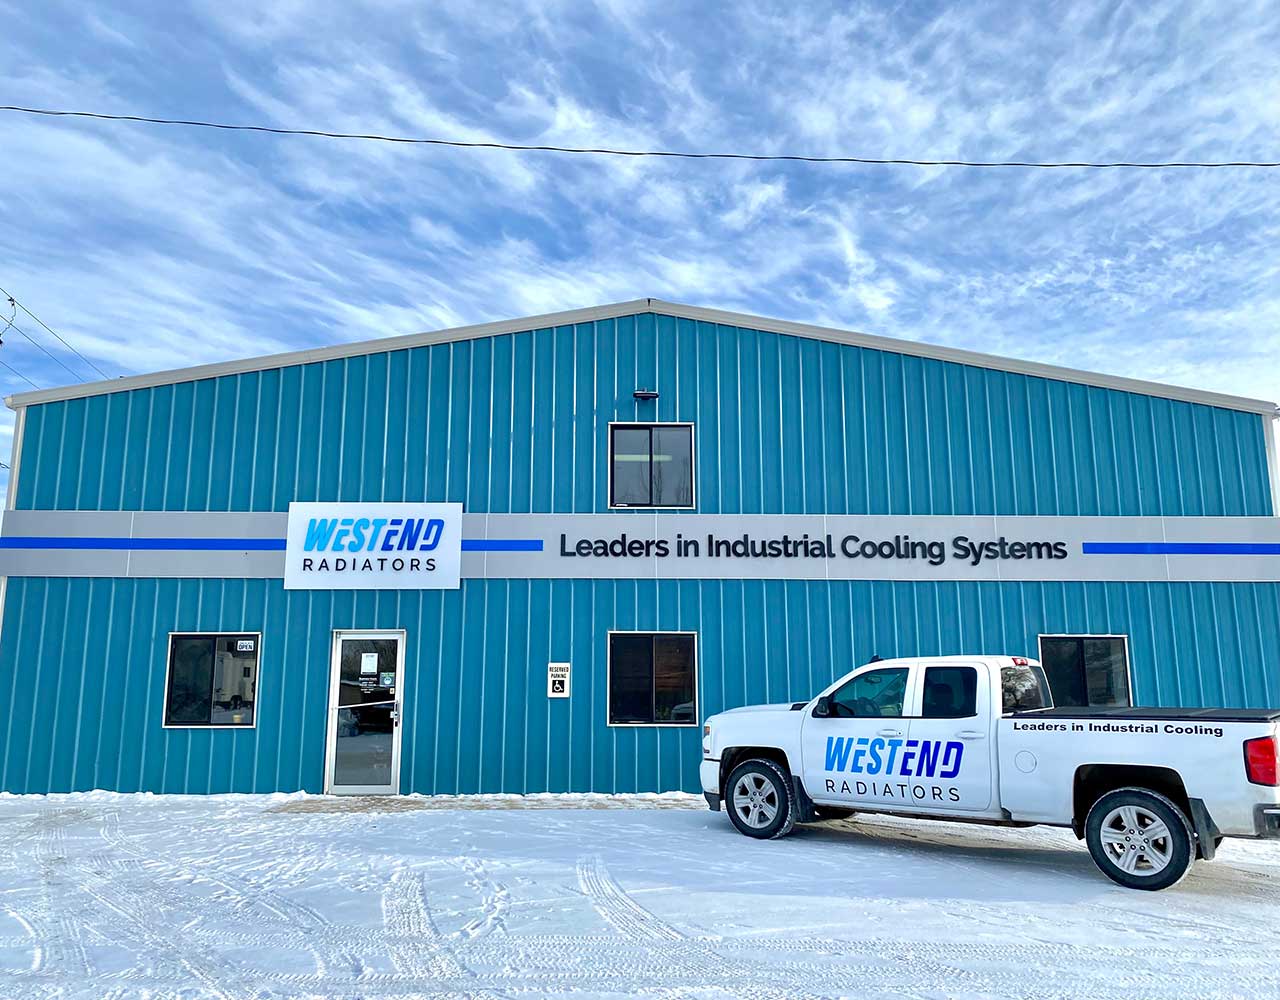 Introducing our New Full-Service Shop in Estevan, Saskatchewan